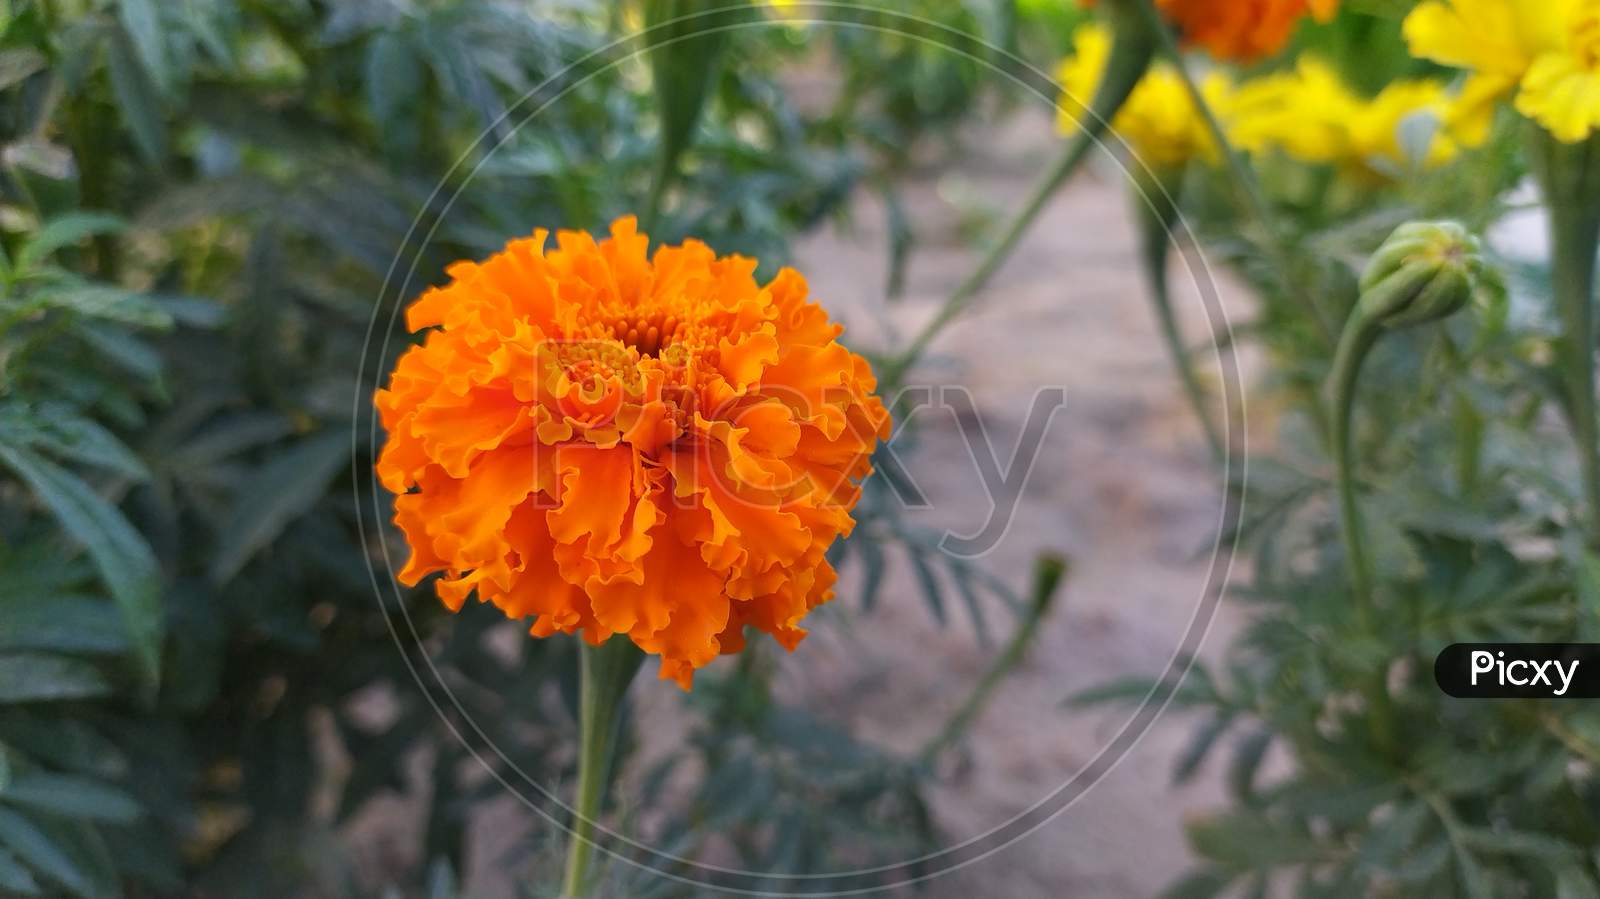 Gilly Flower, Yello flower, Mexican marigold, Aztec marigold, Tagetes erecta